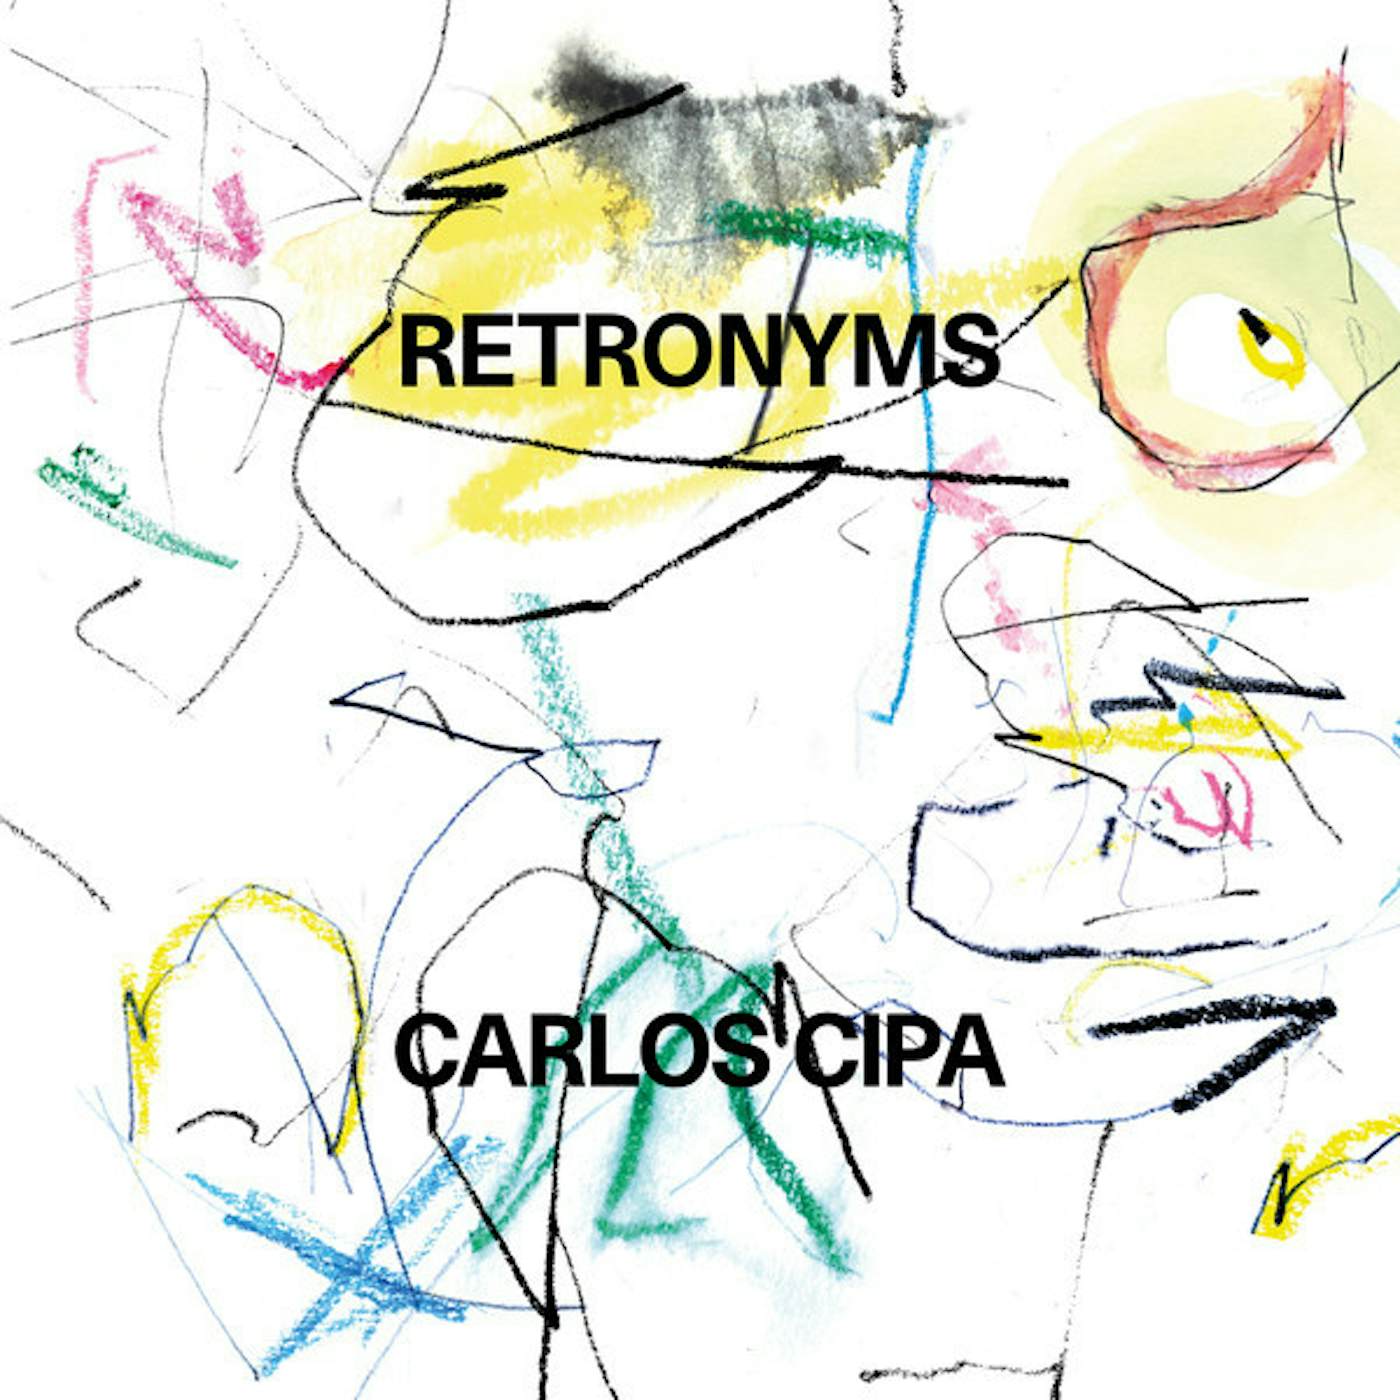 Carlos Cipa Retronyms Vinyl Record